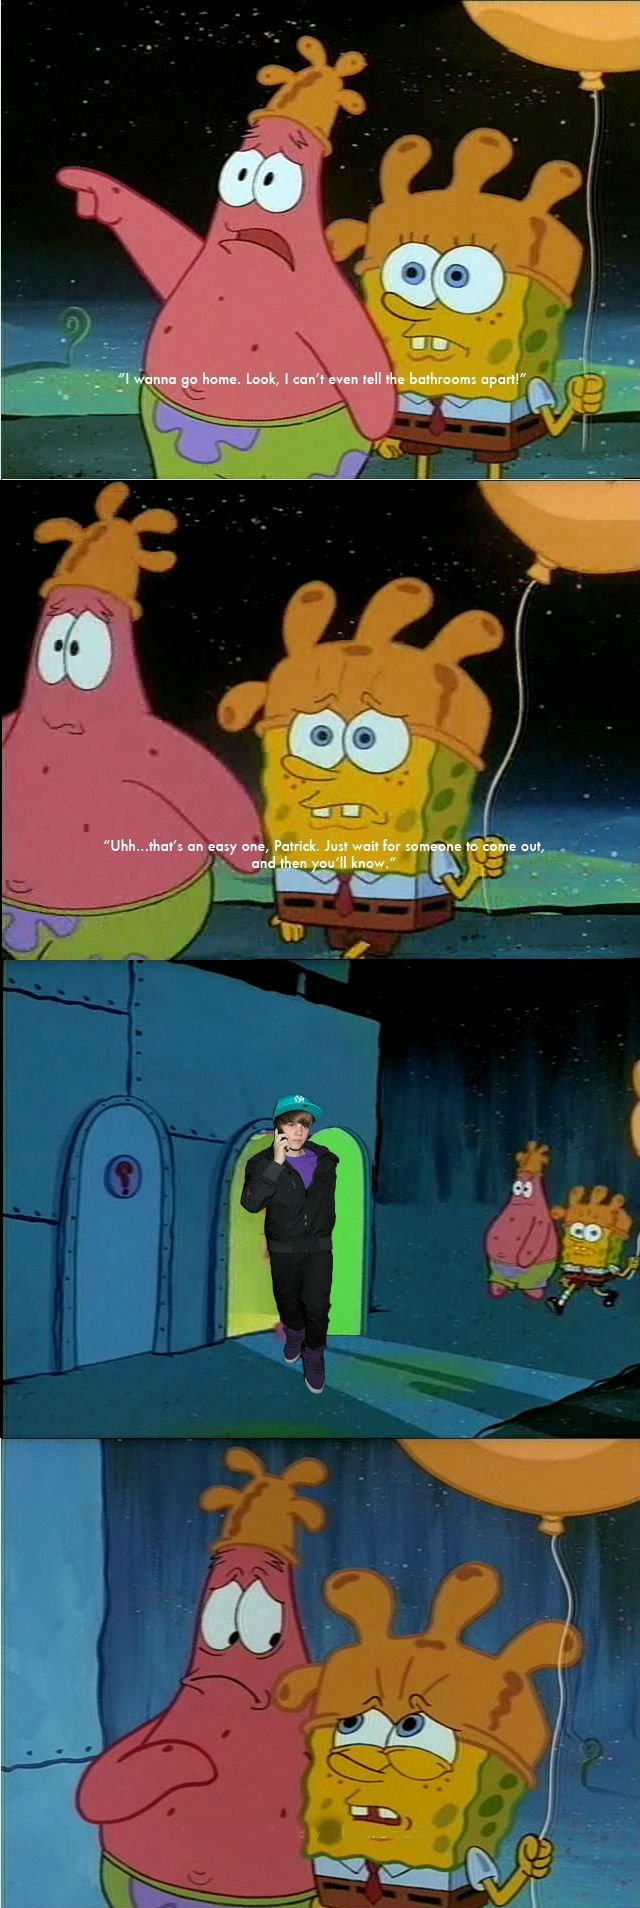 spongebob + patrick - meme